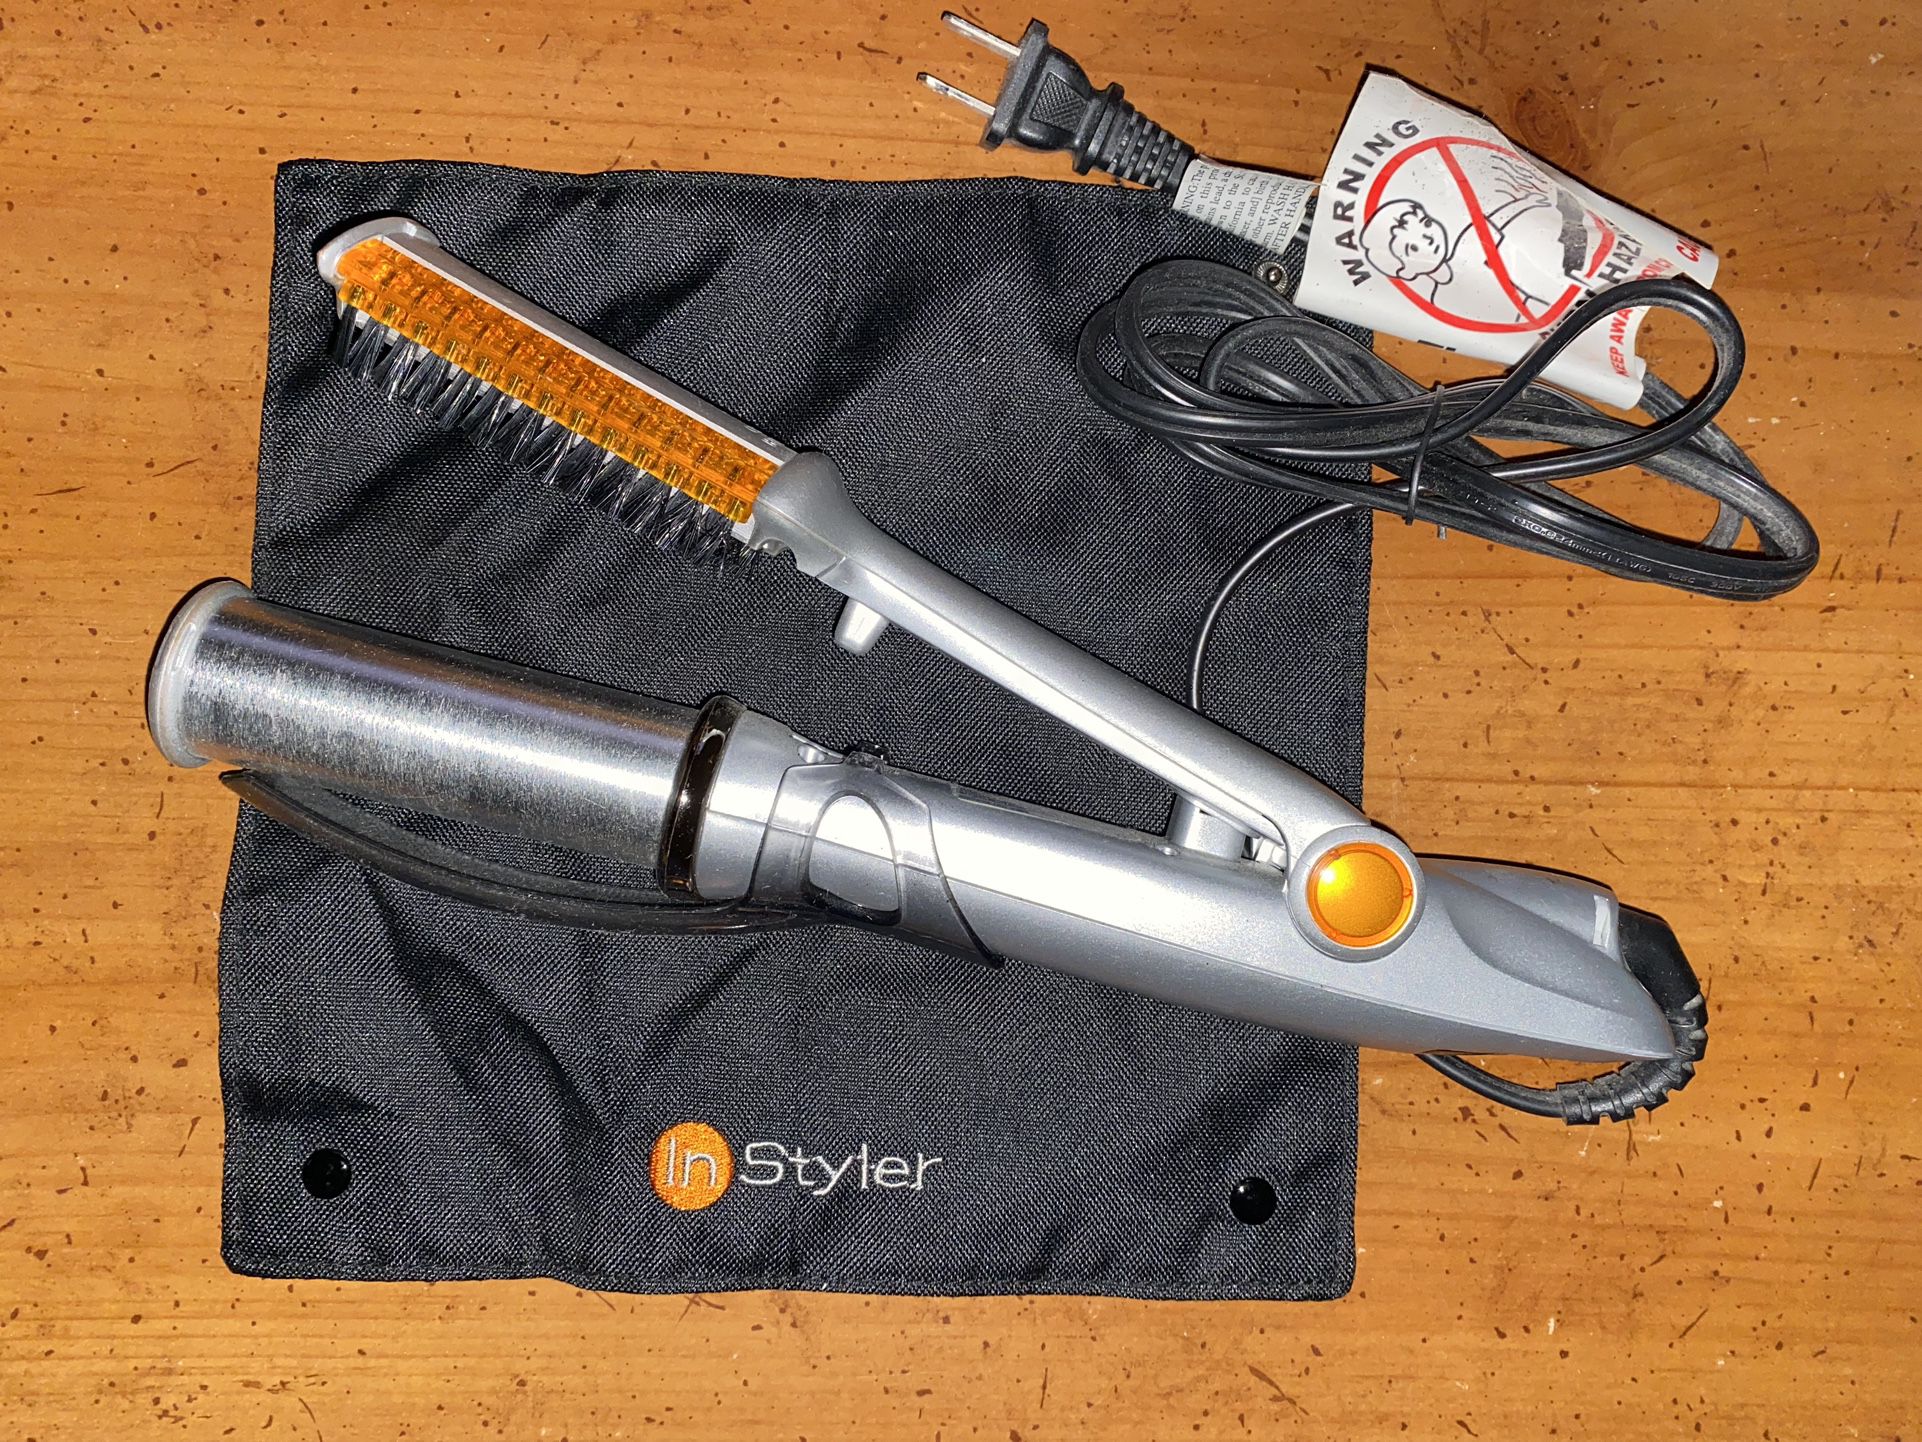 InStyler hair straightener - $20 